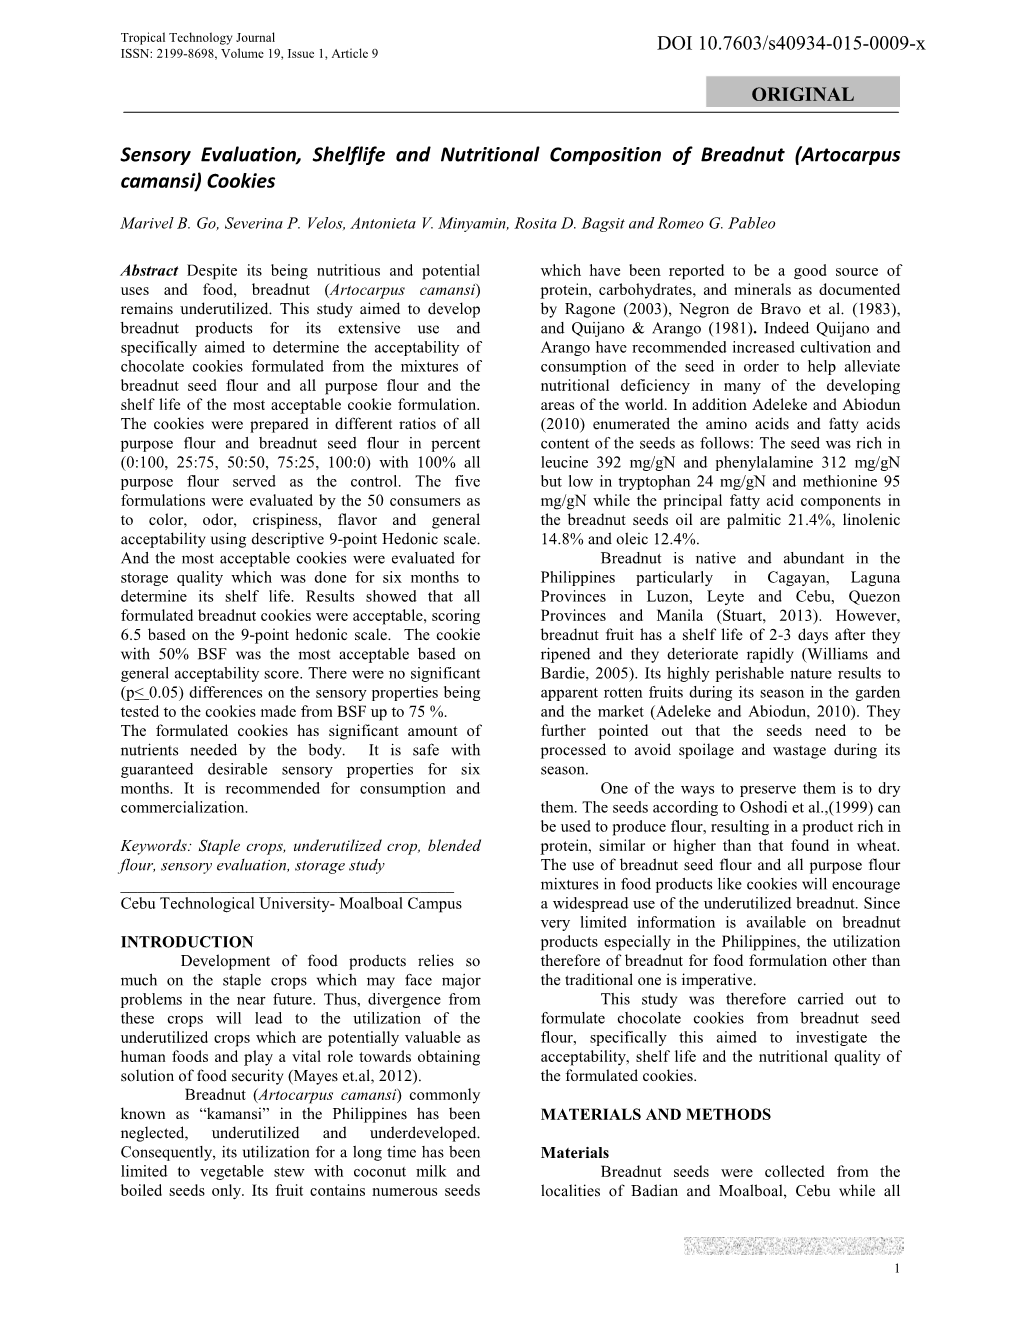 Sensory Evaluation, Shelflife and Nutritional Composition of Breadnut (Artocarpus Camansi) Cookies